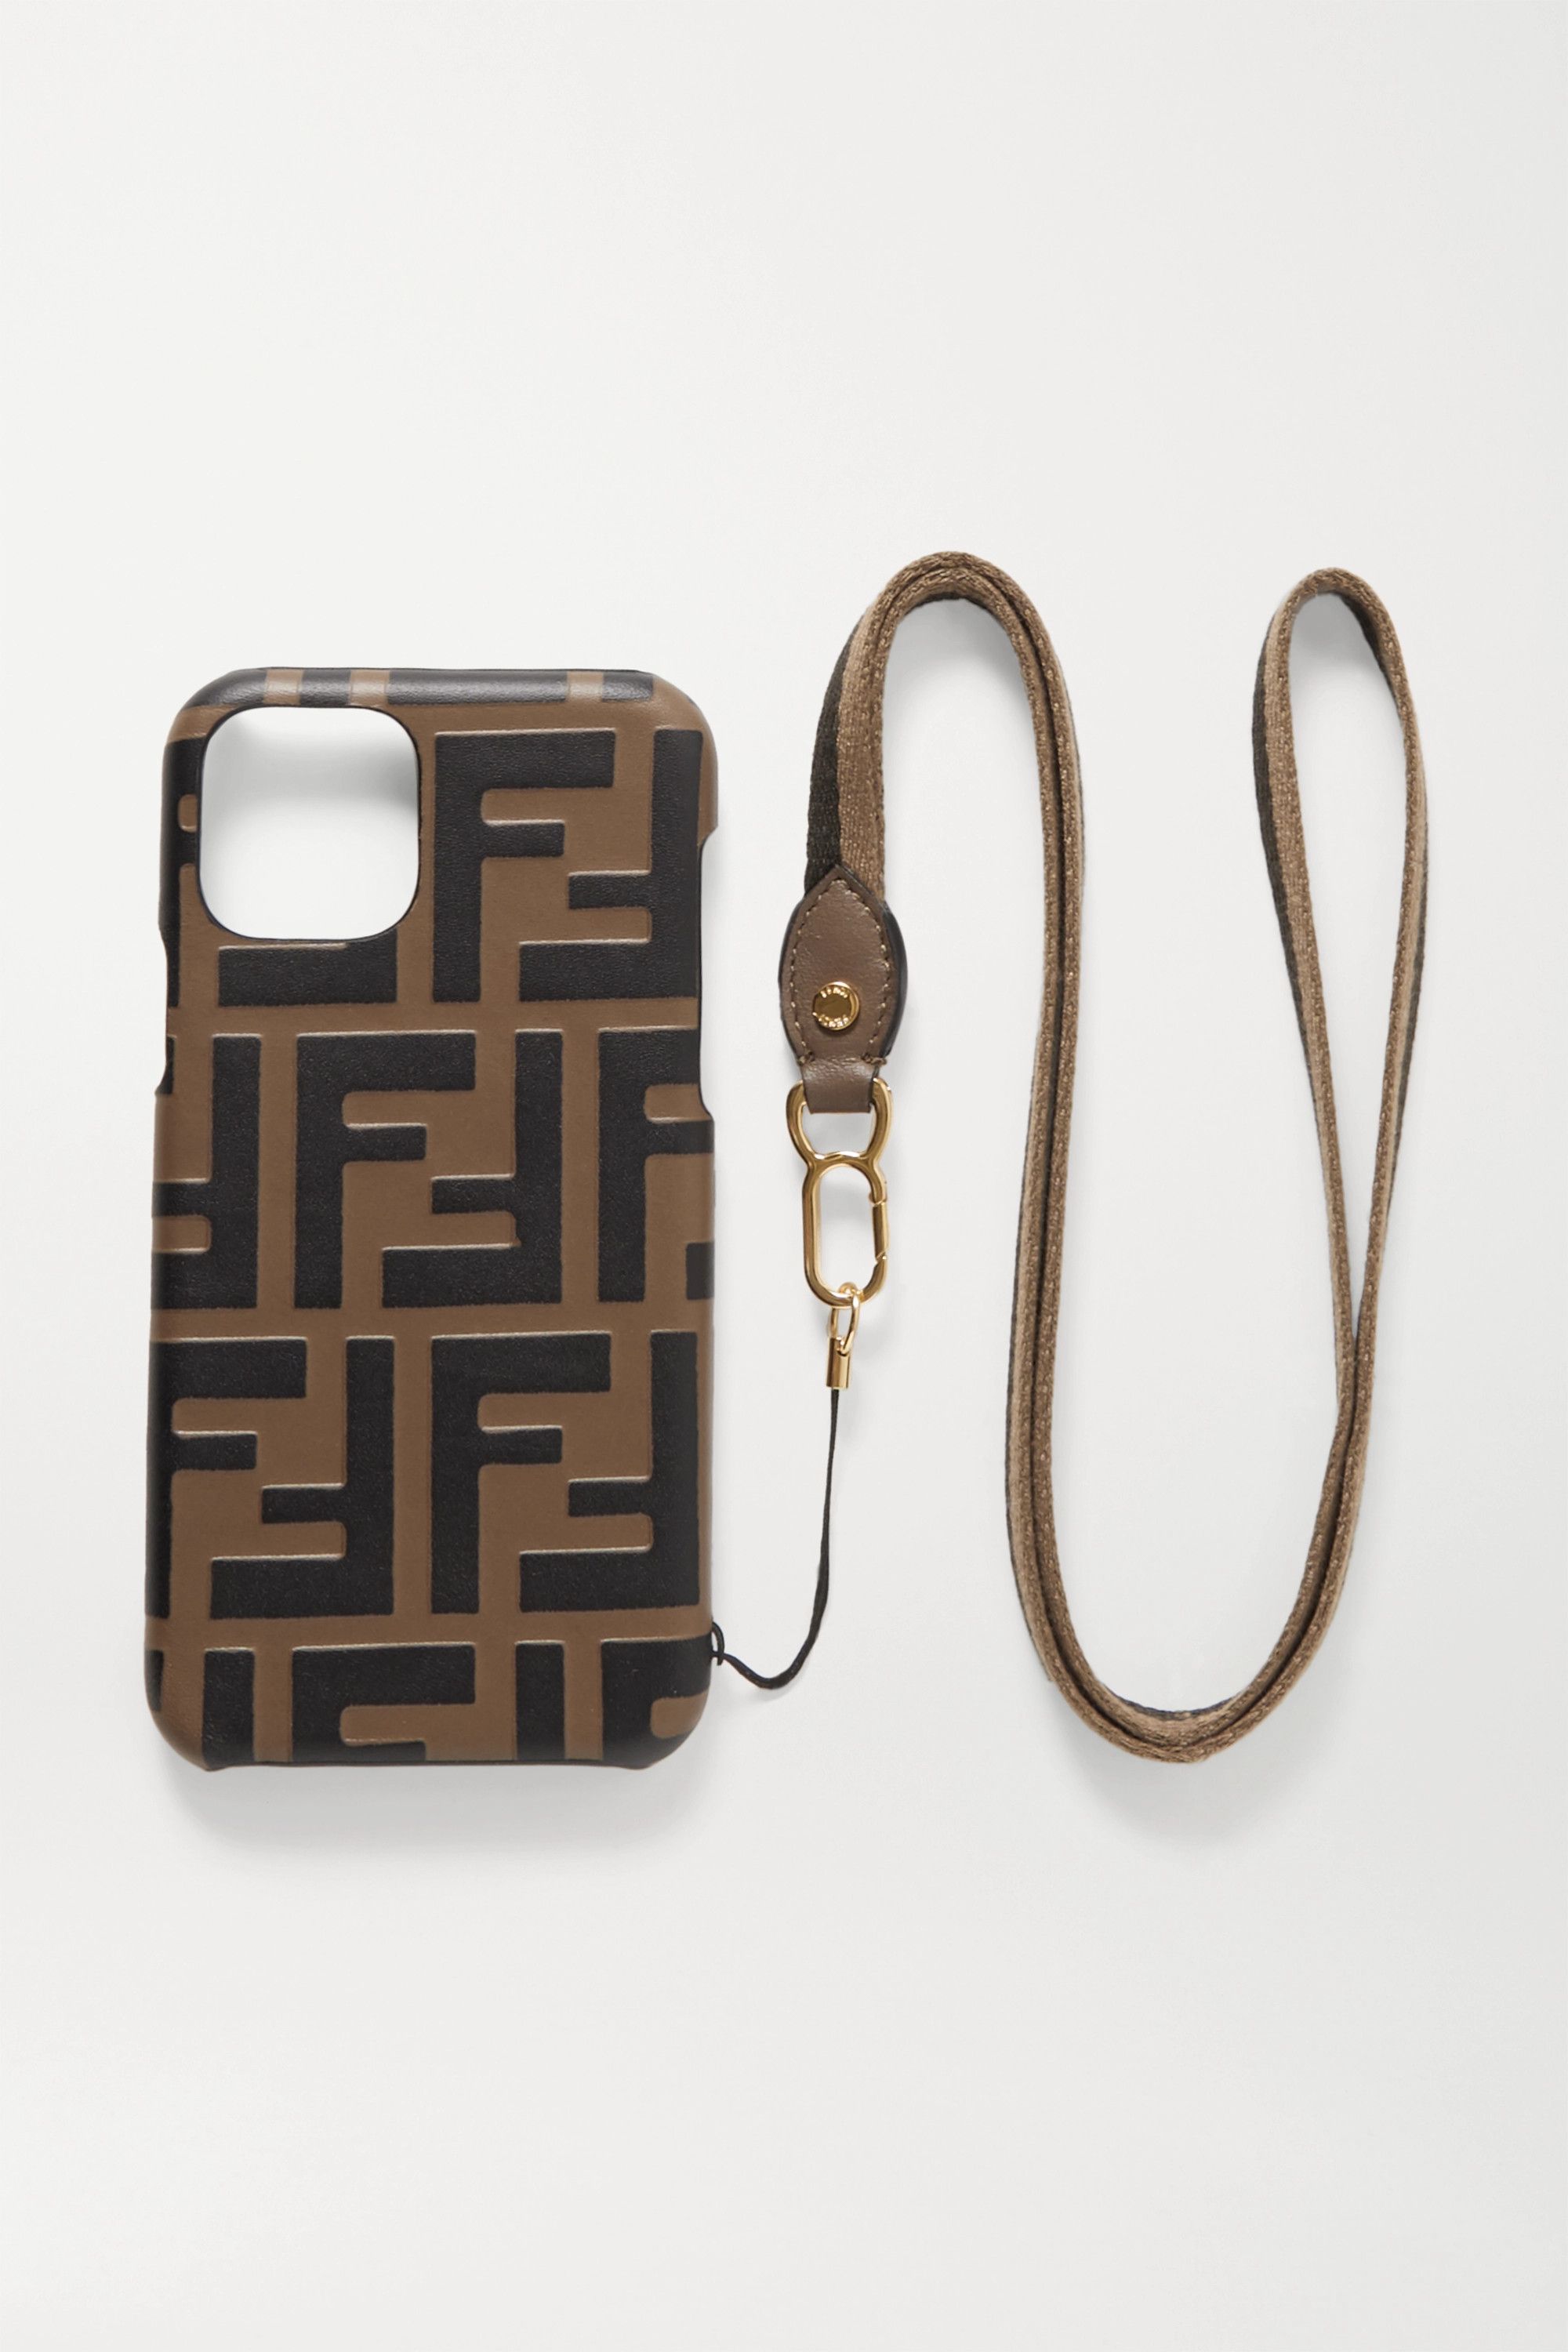 fendi phone case with chain